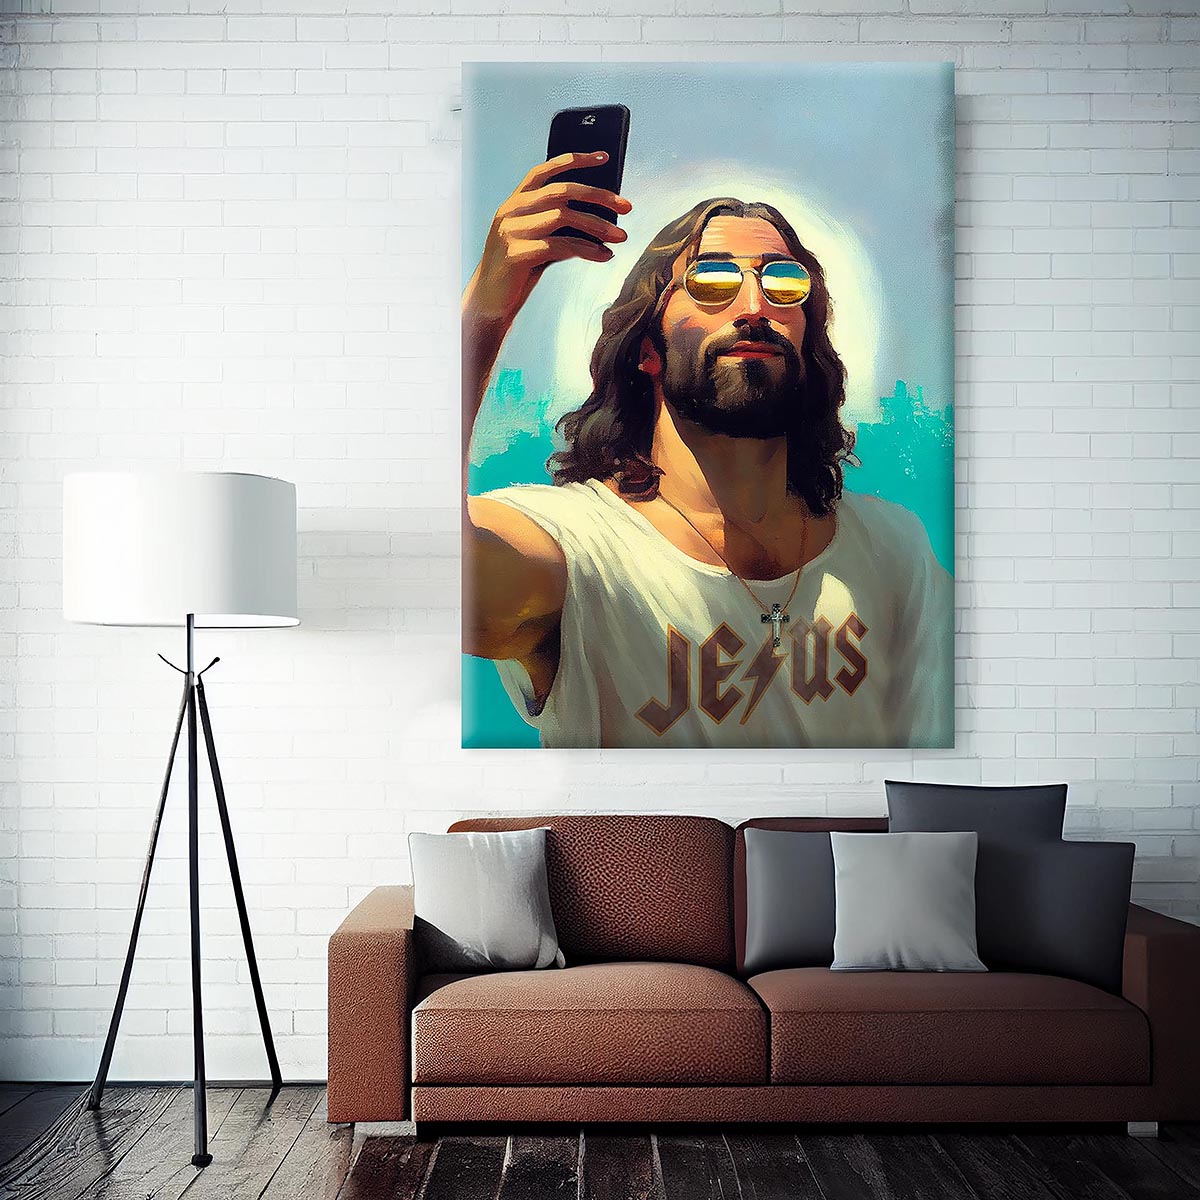 "I Am Jesus" canvas print